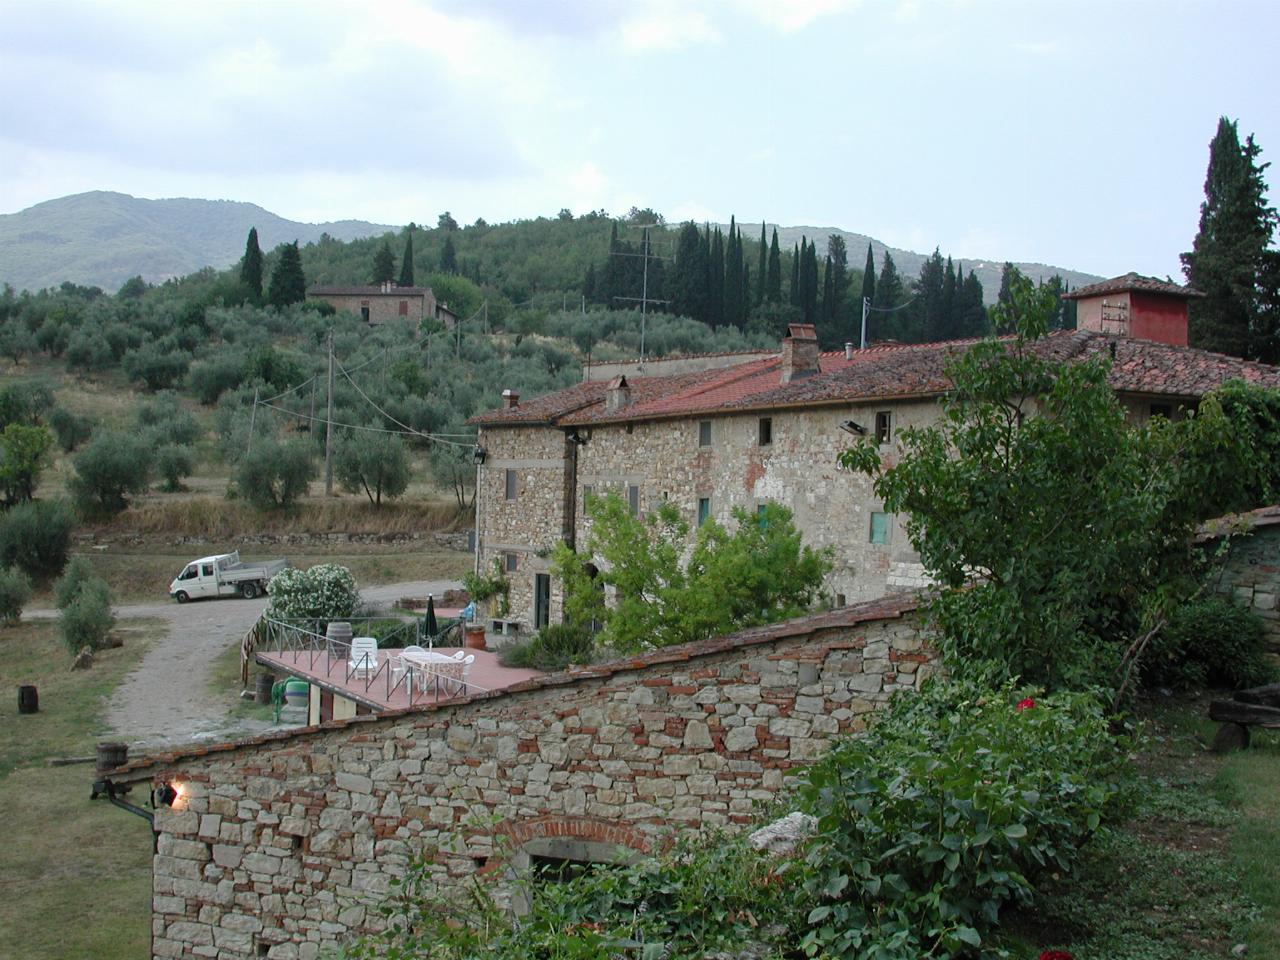 Castello del Trebbio wine store and nearby hills with olive trees